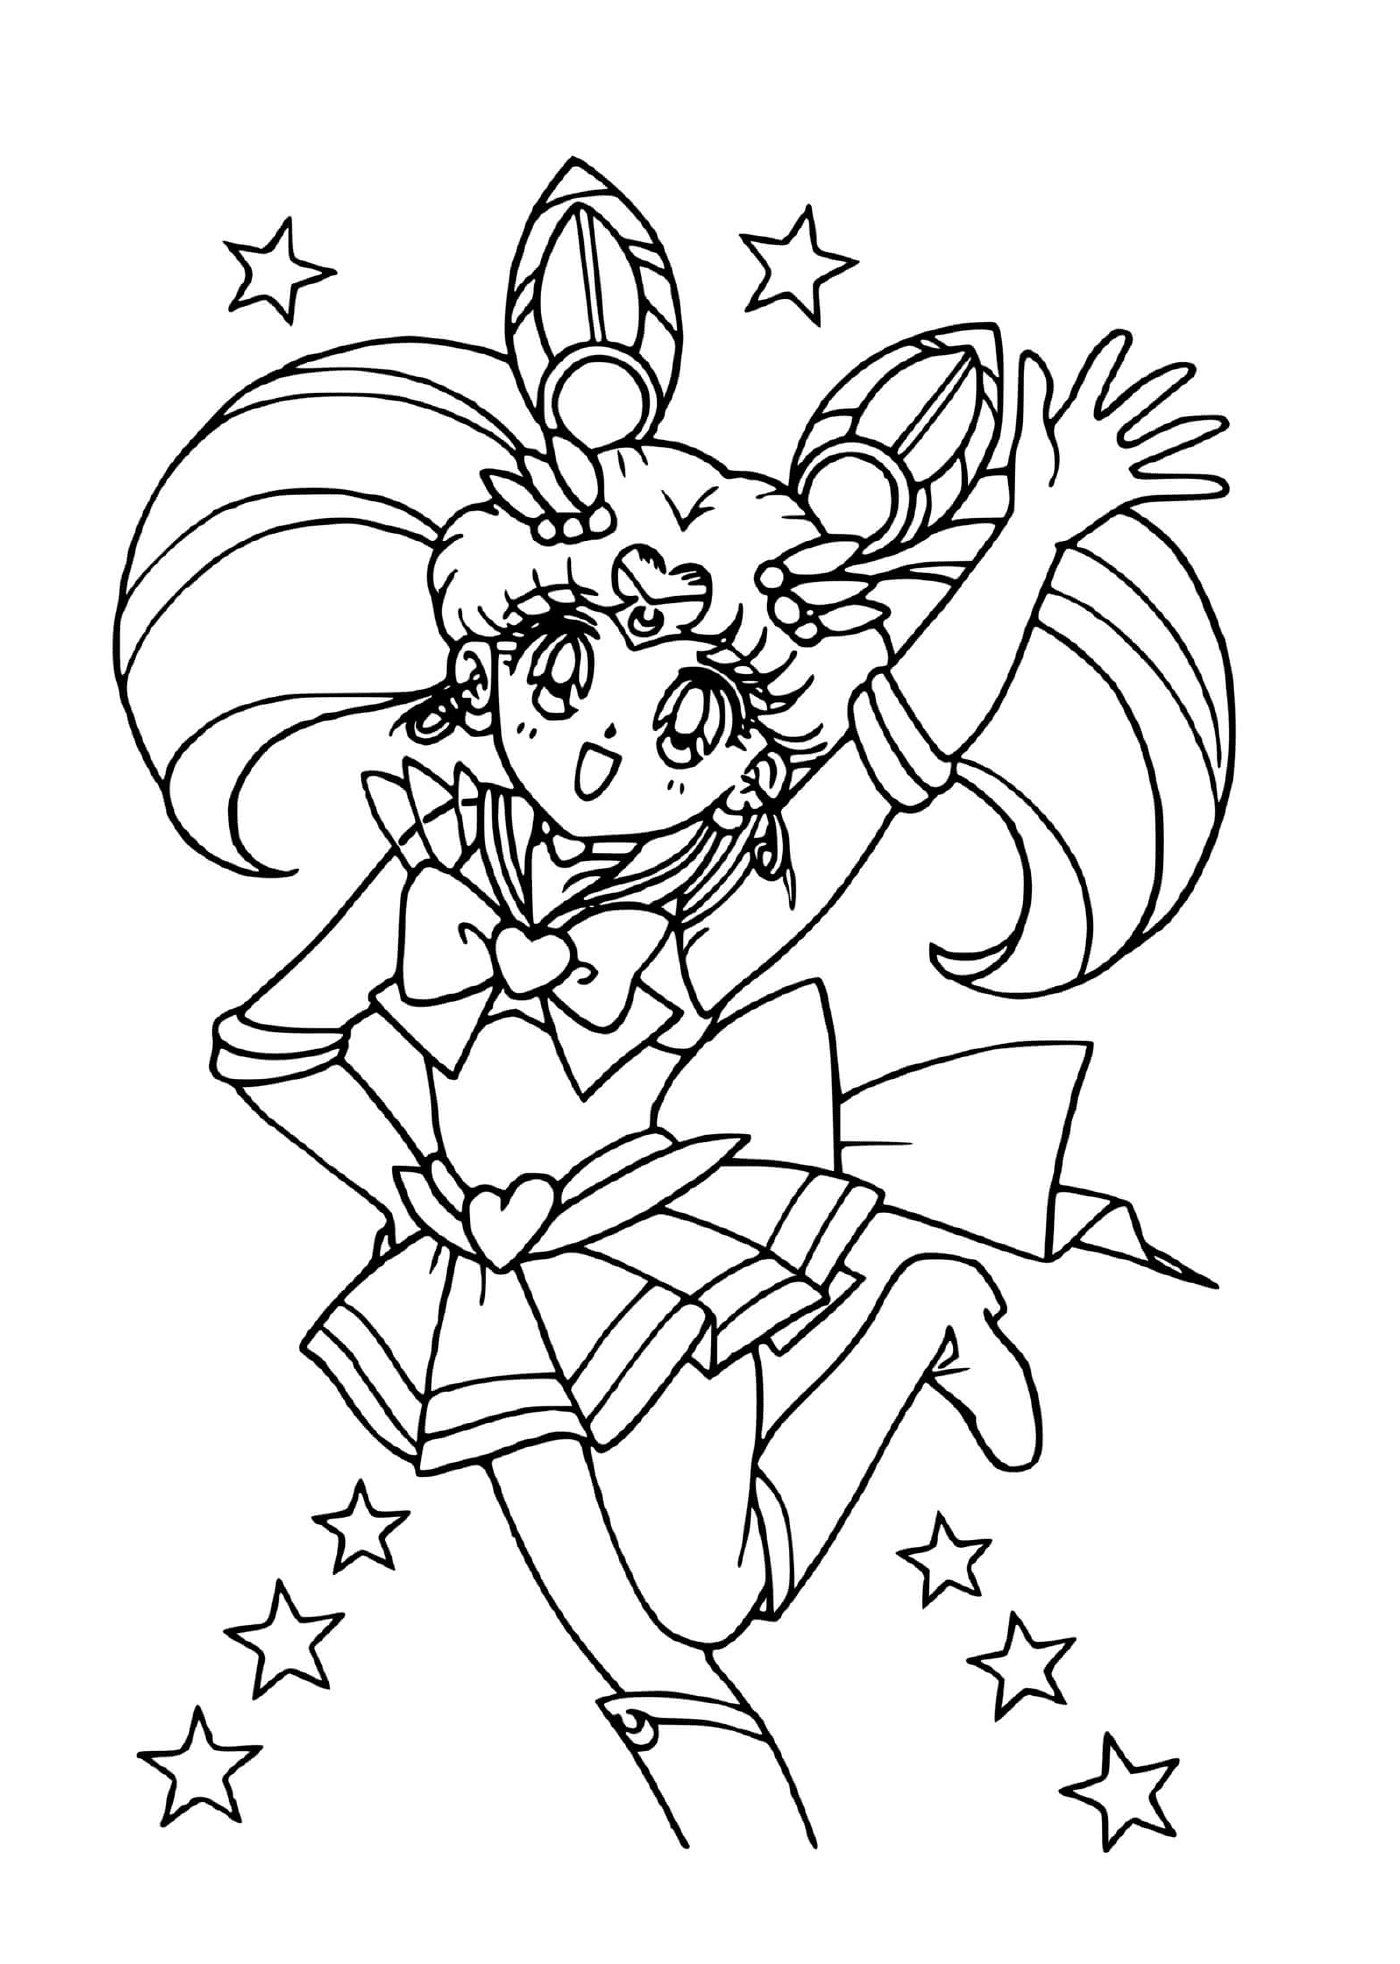  Small character of Sailor Moon 